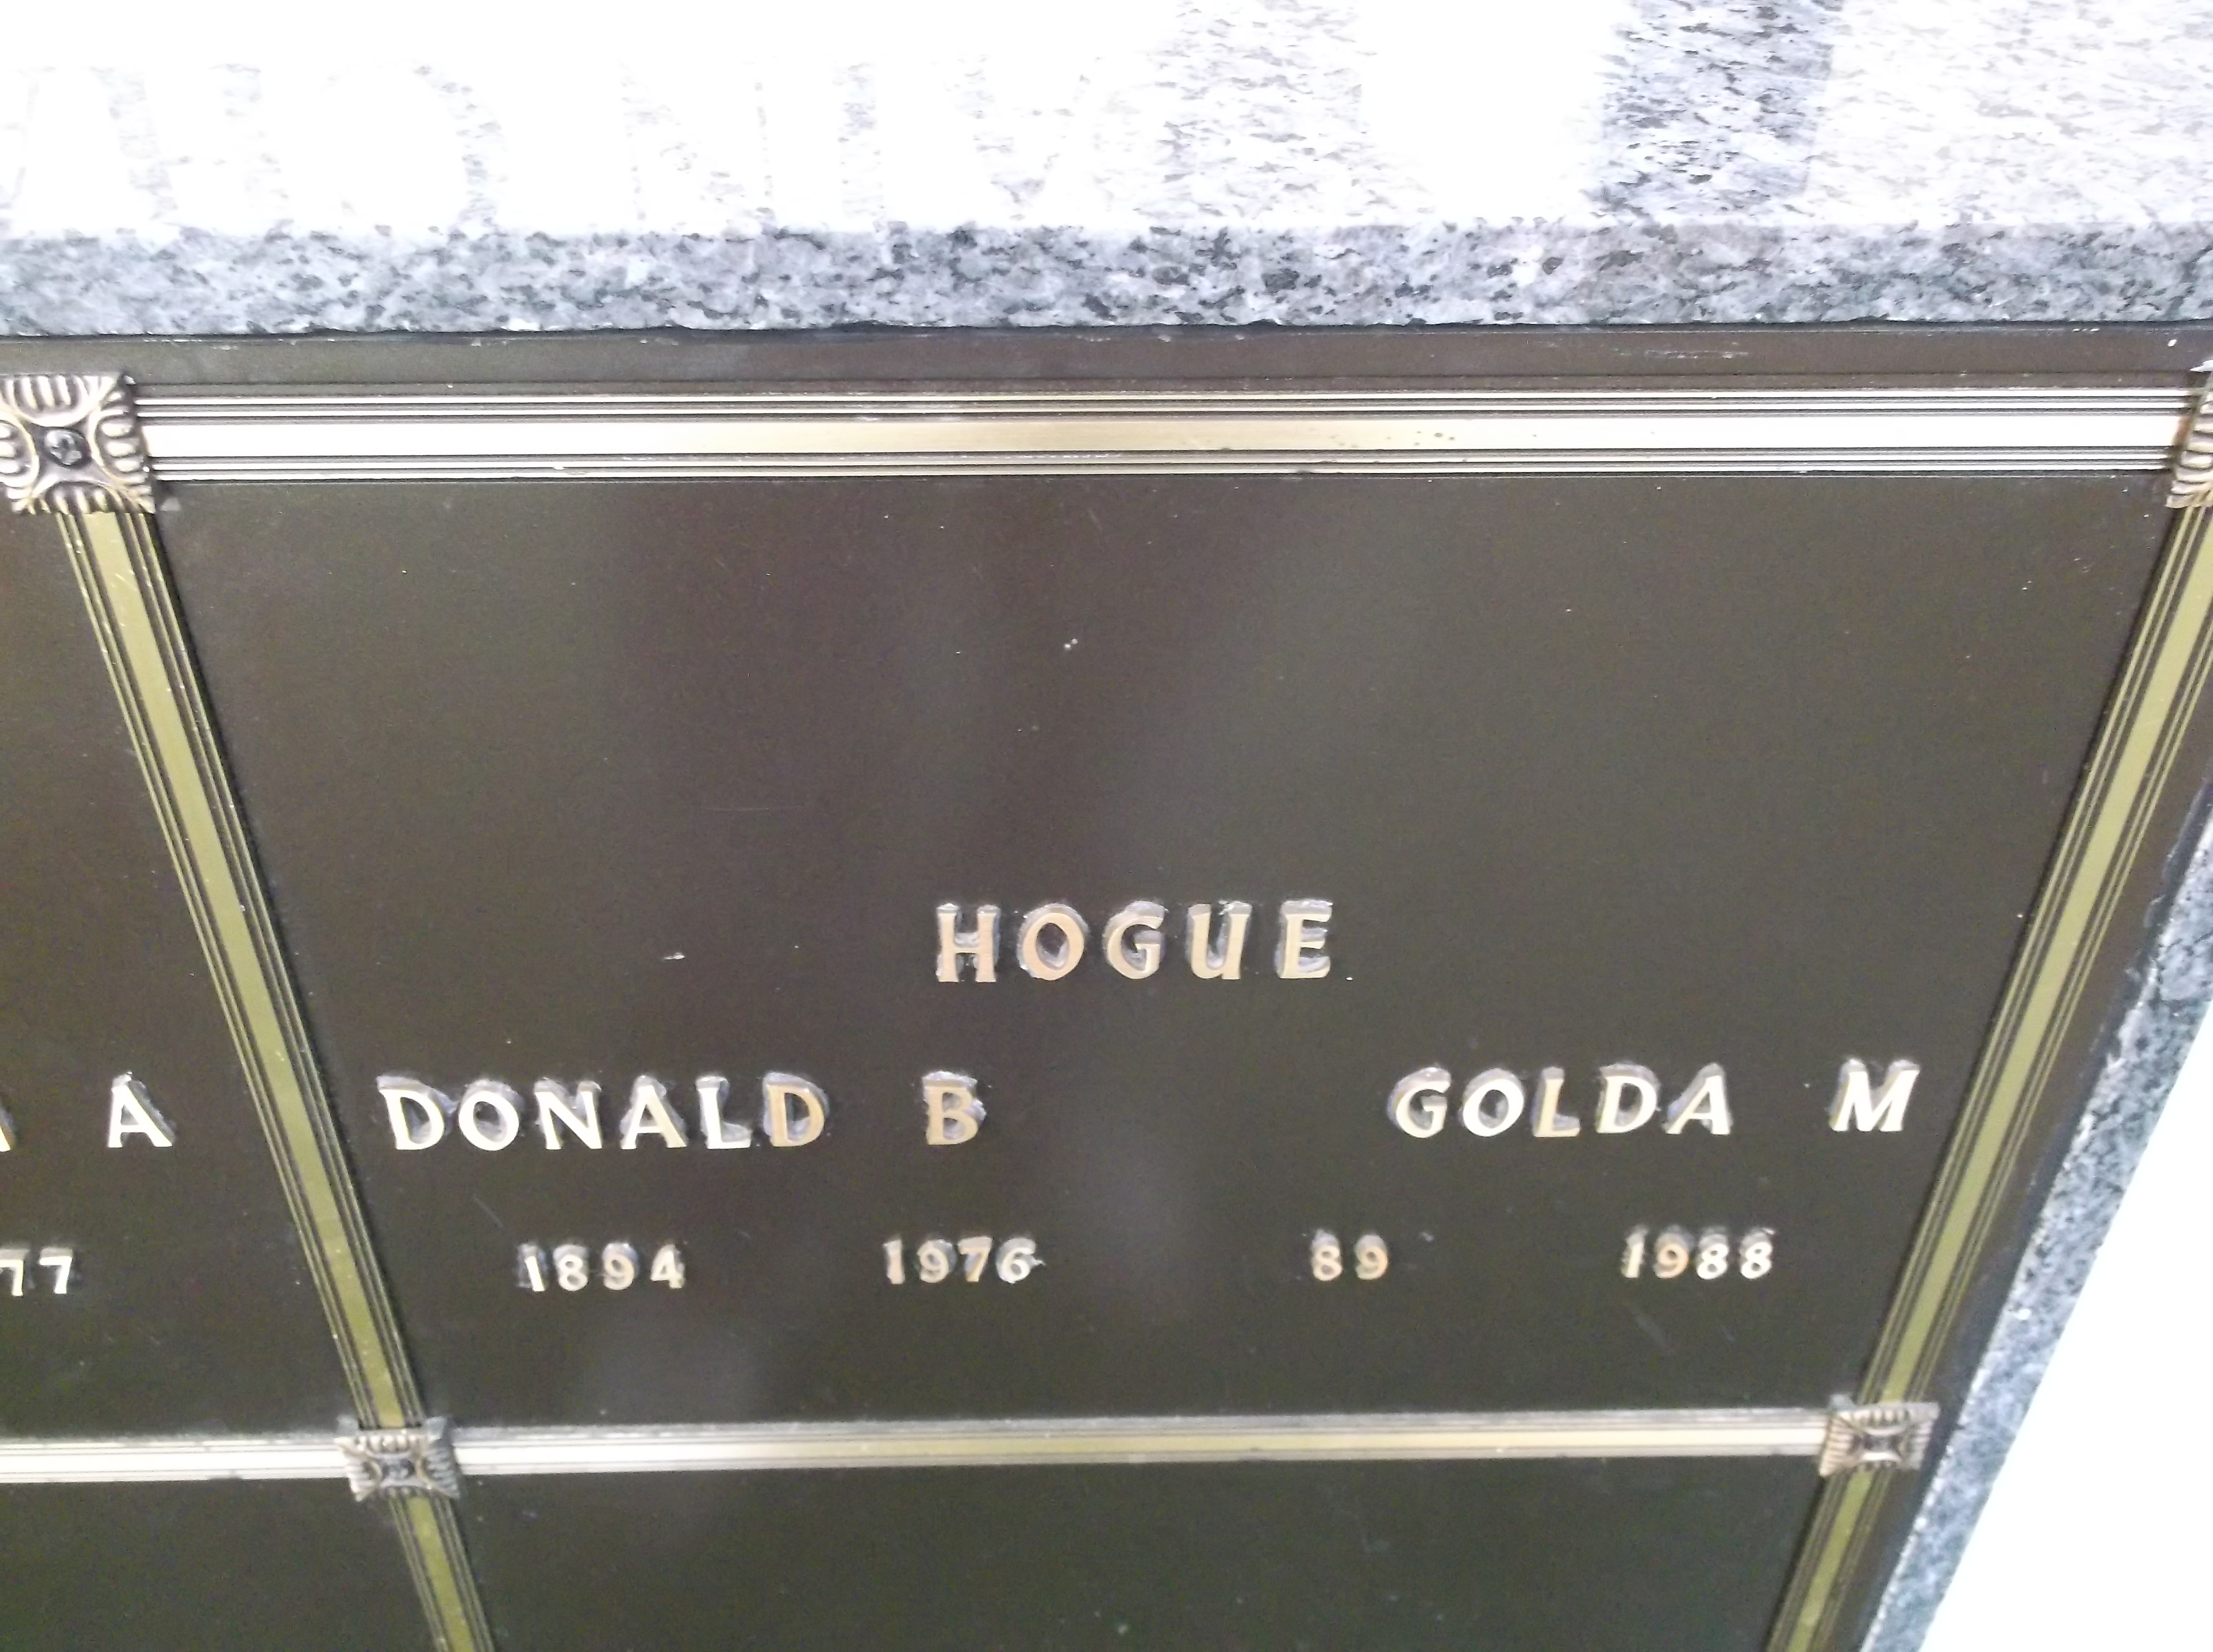 Donald B Hogue